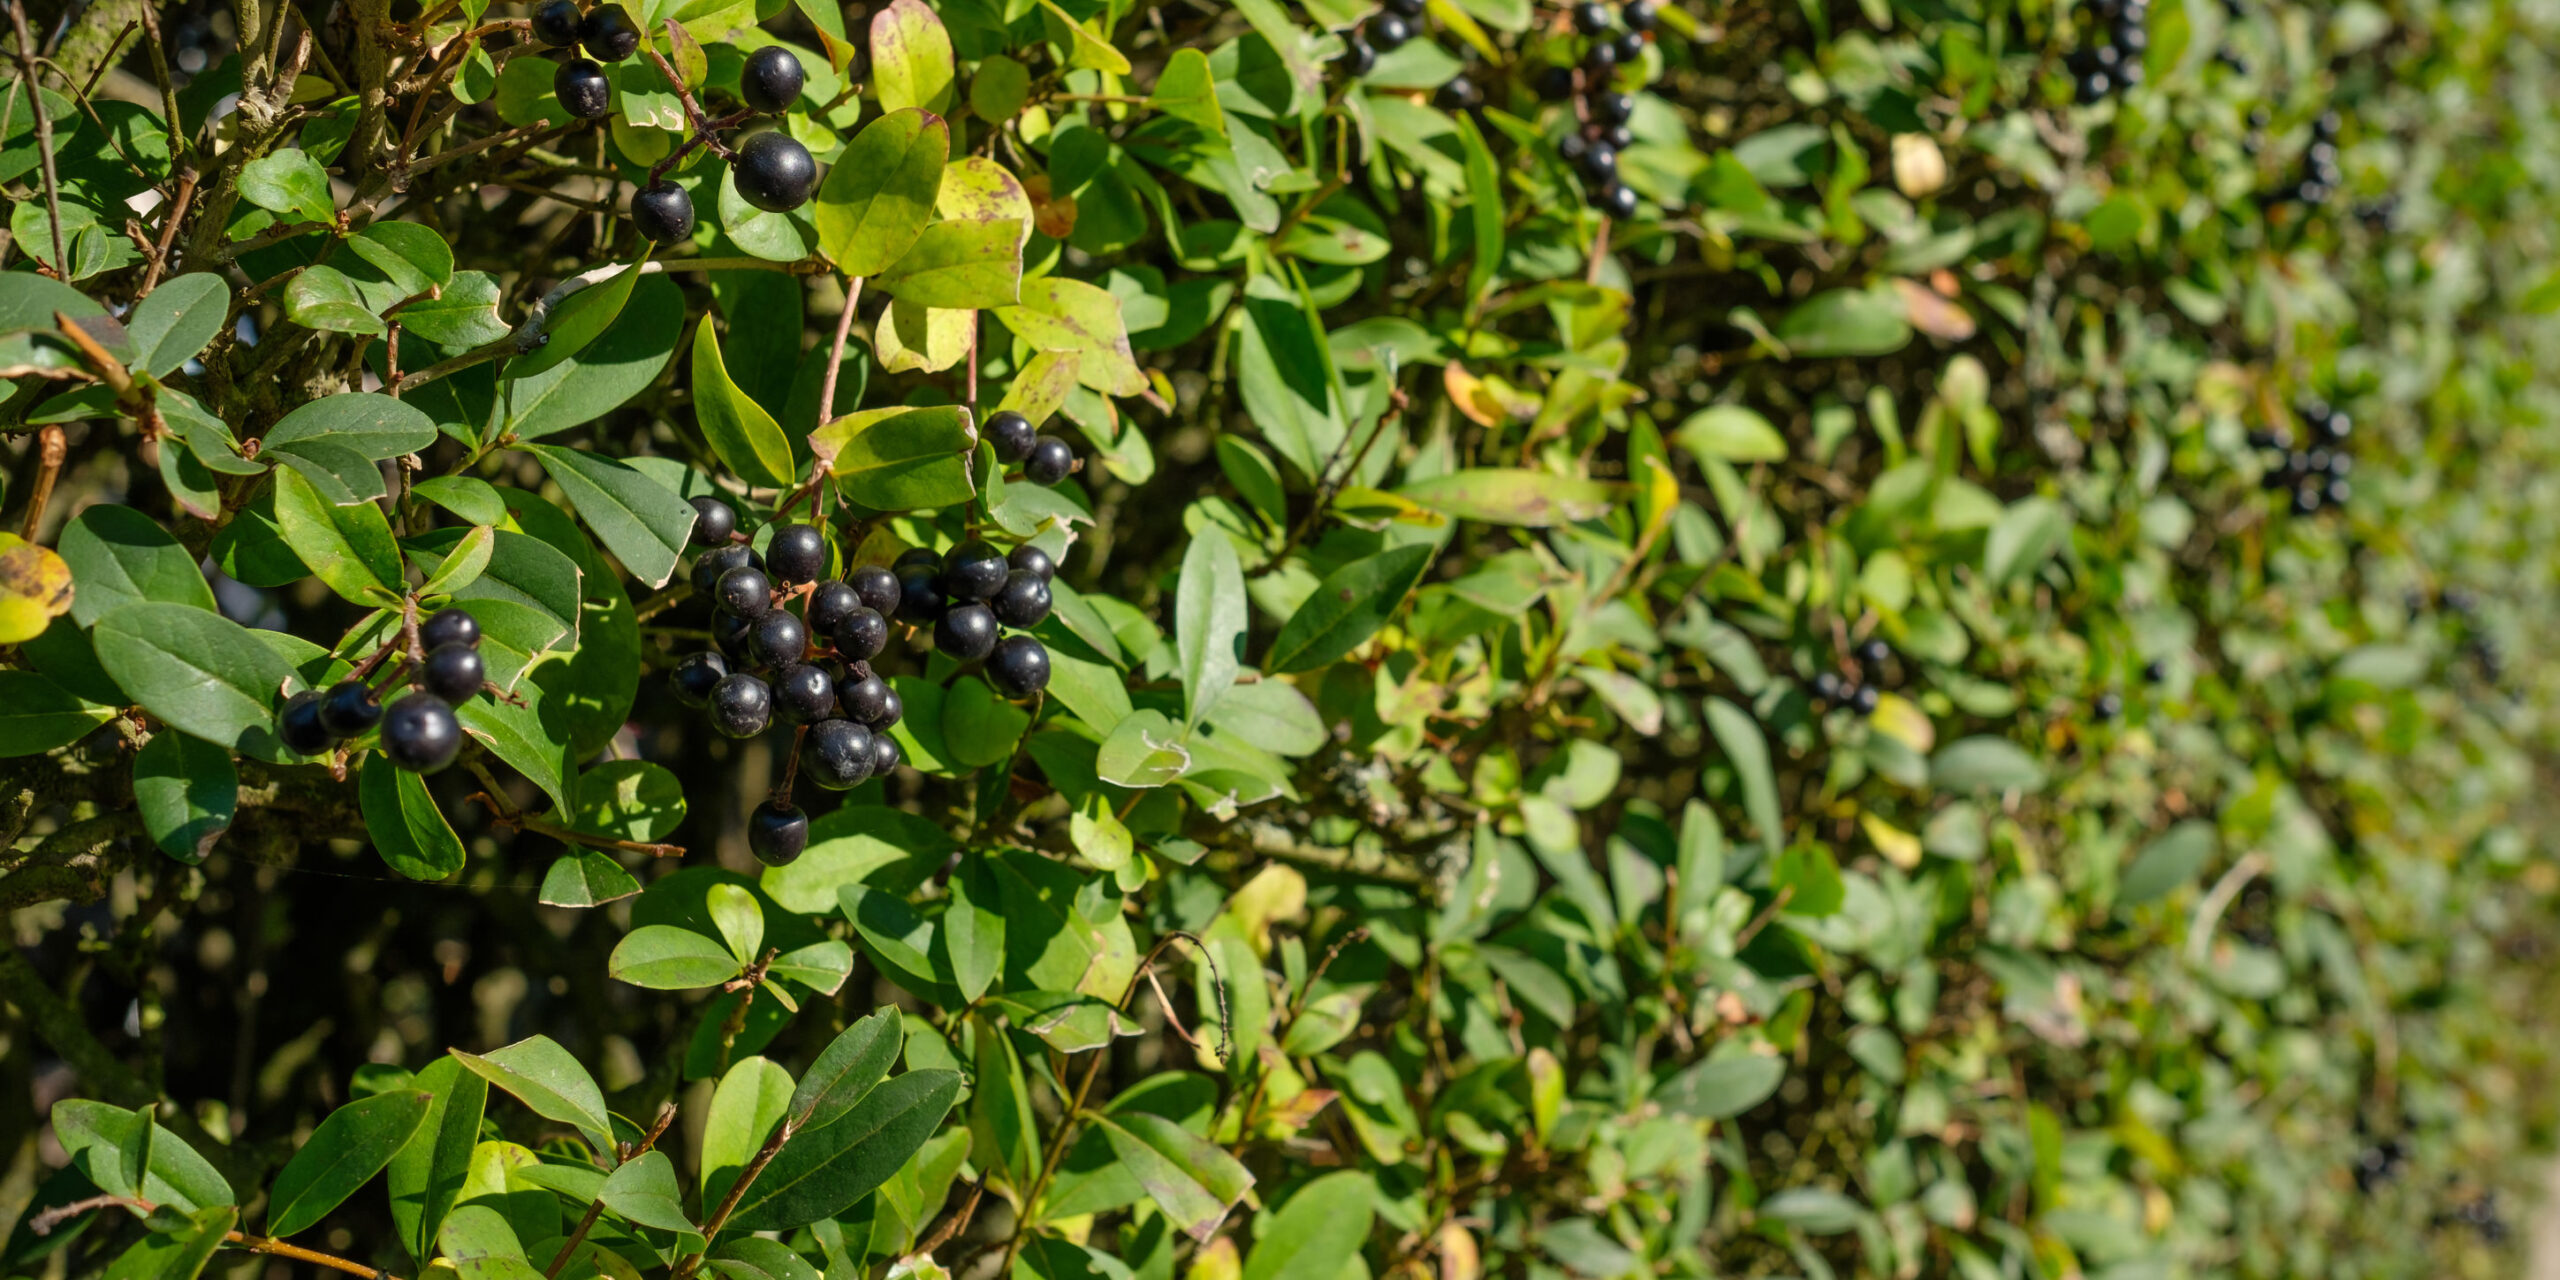 Black berries at a privet (Ligustrum) hedge as close-up